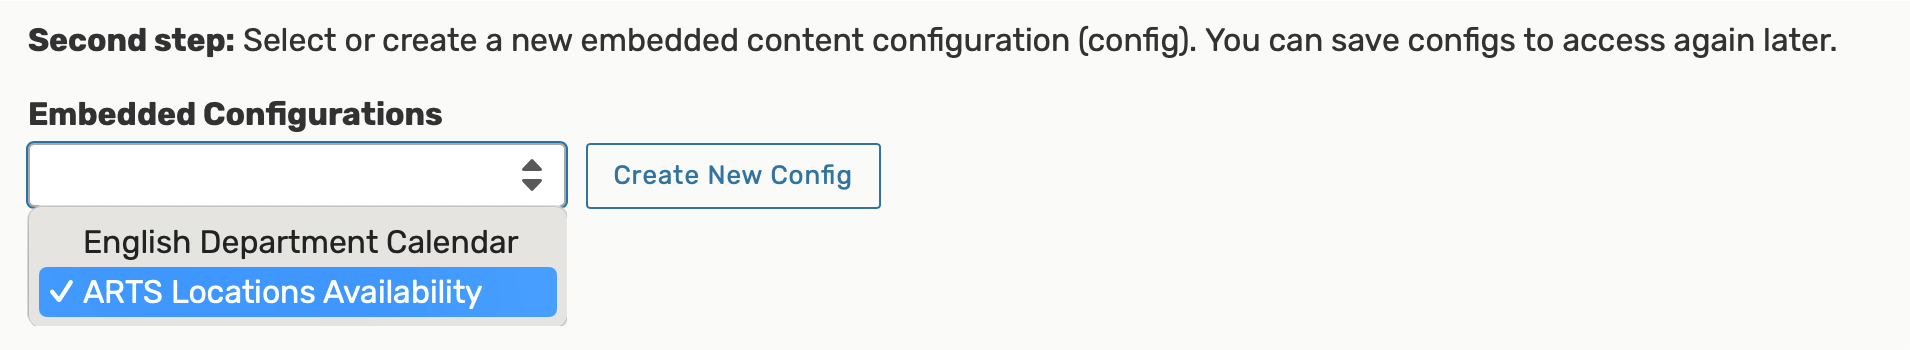 Select or Create Configuration